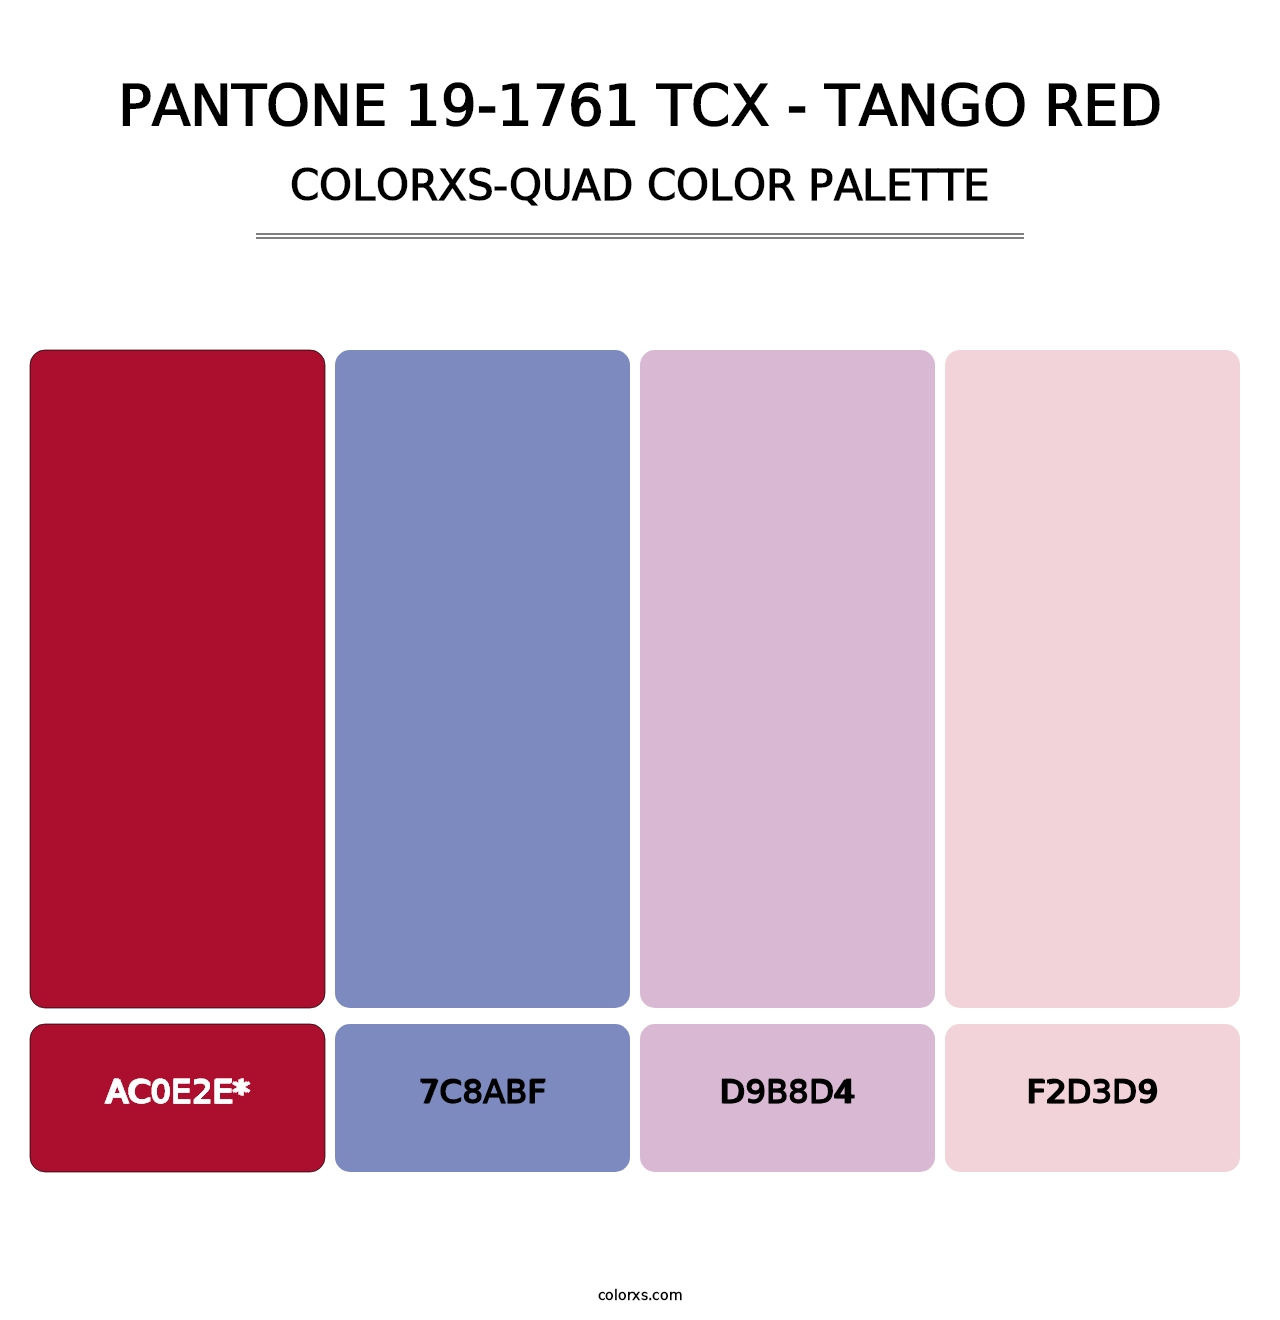 PANTONE 19-1761 TCX - Tango Red - Colorxs Quad Palette